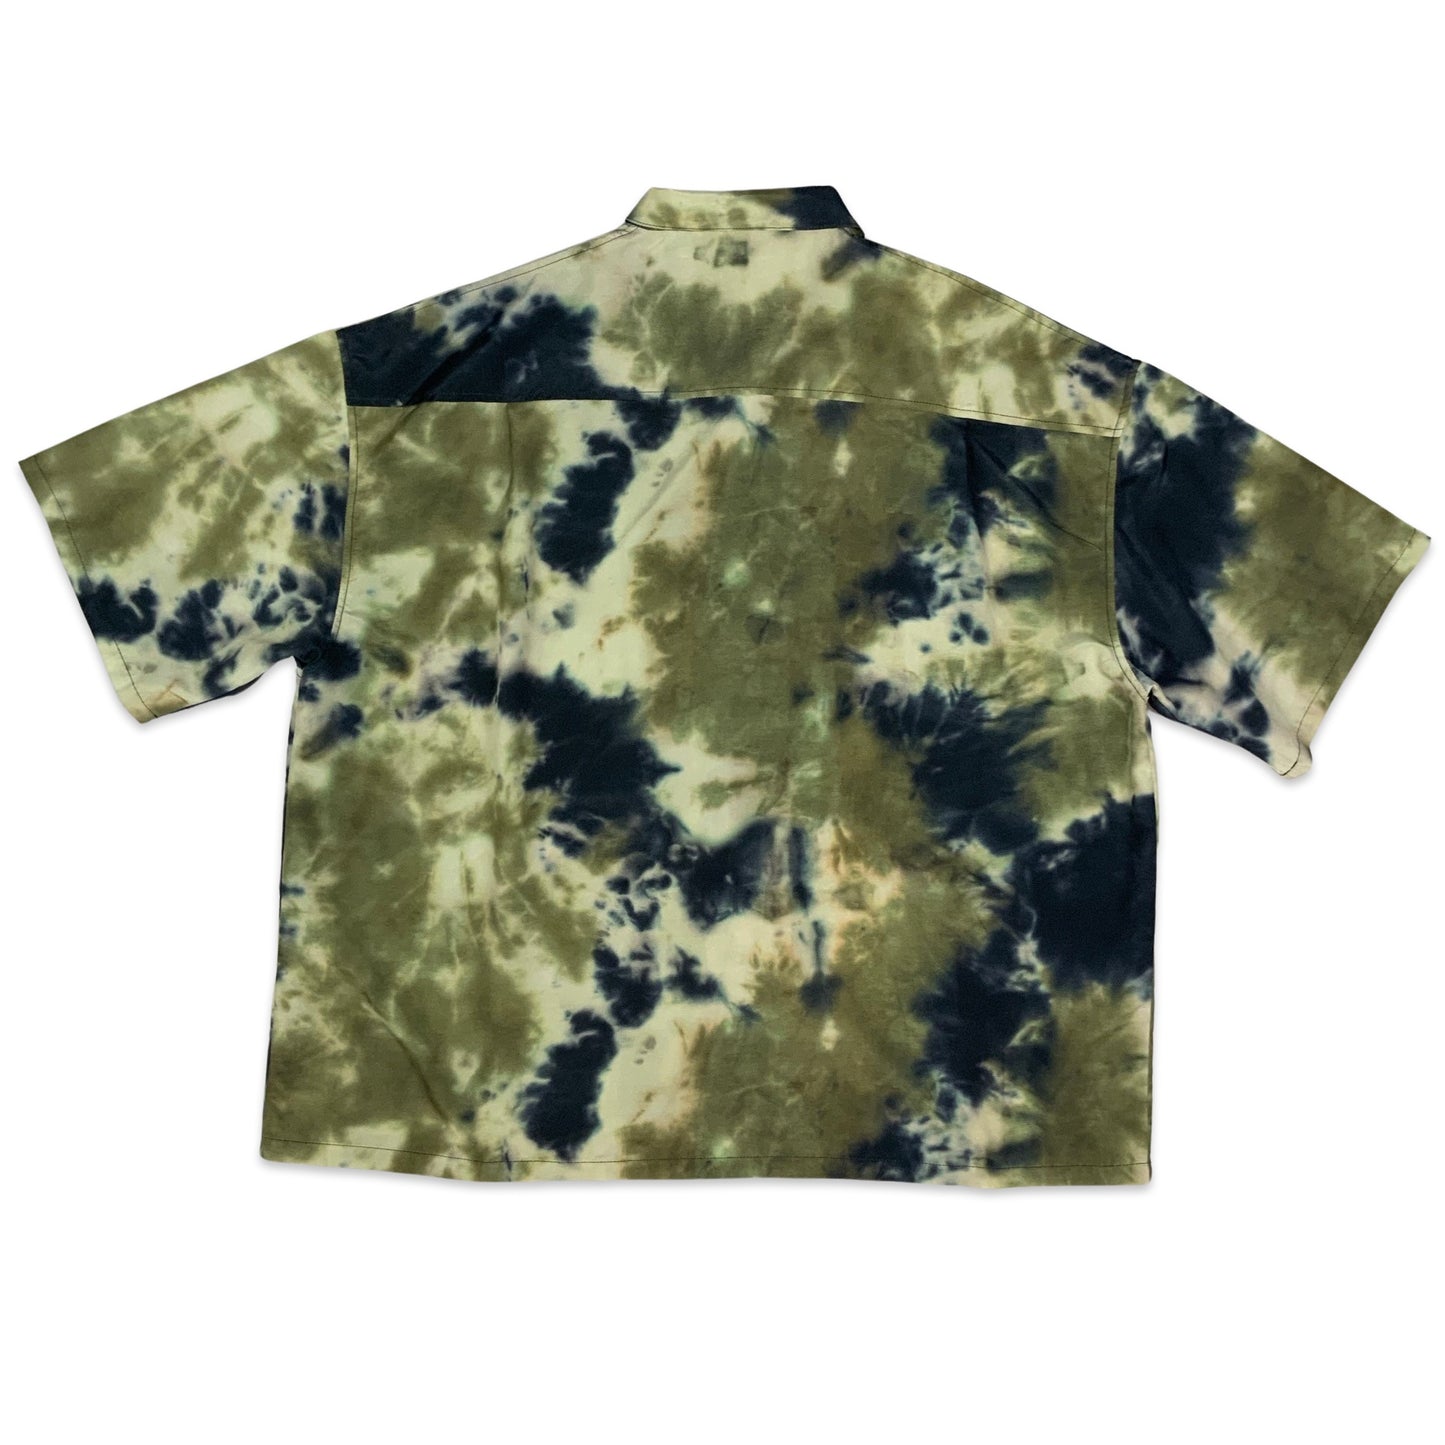 90s Green & Black Tye Dye Shirt XL